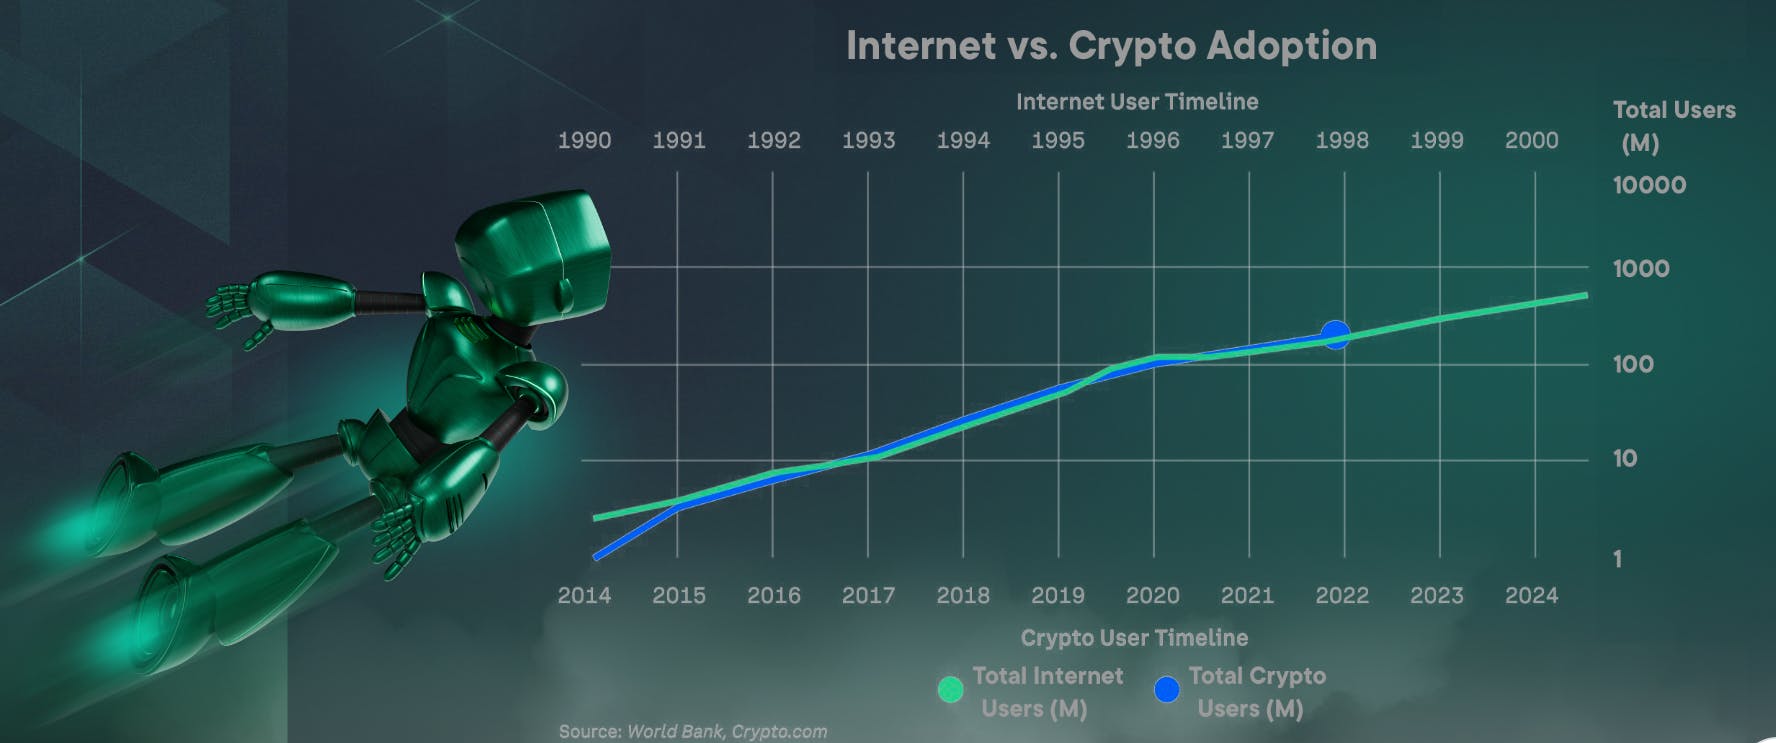 Internet vs. Crypto Adoption